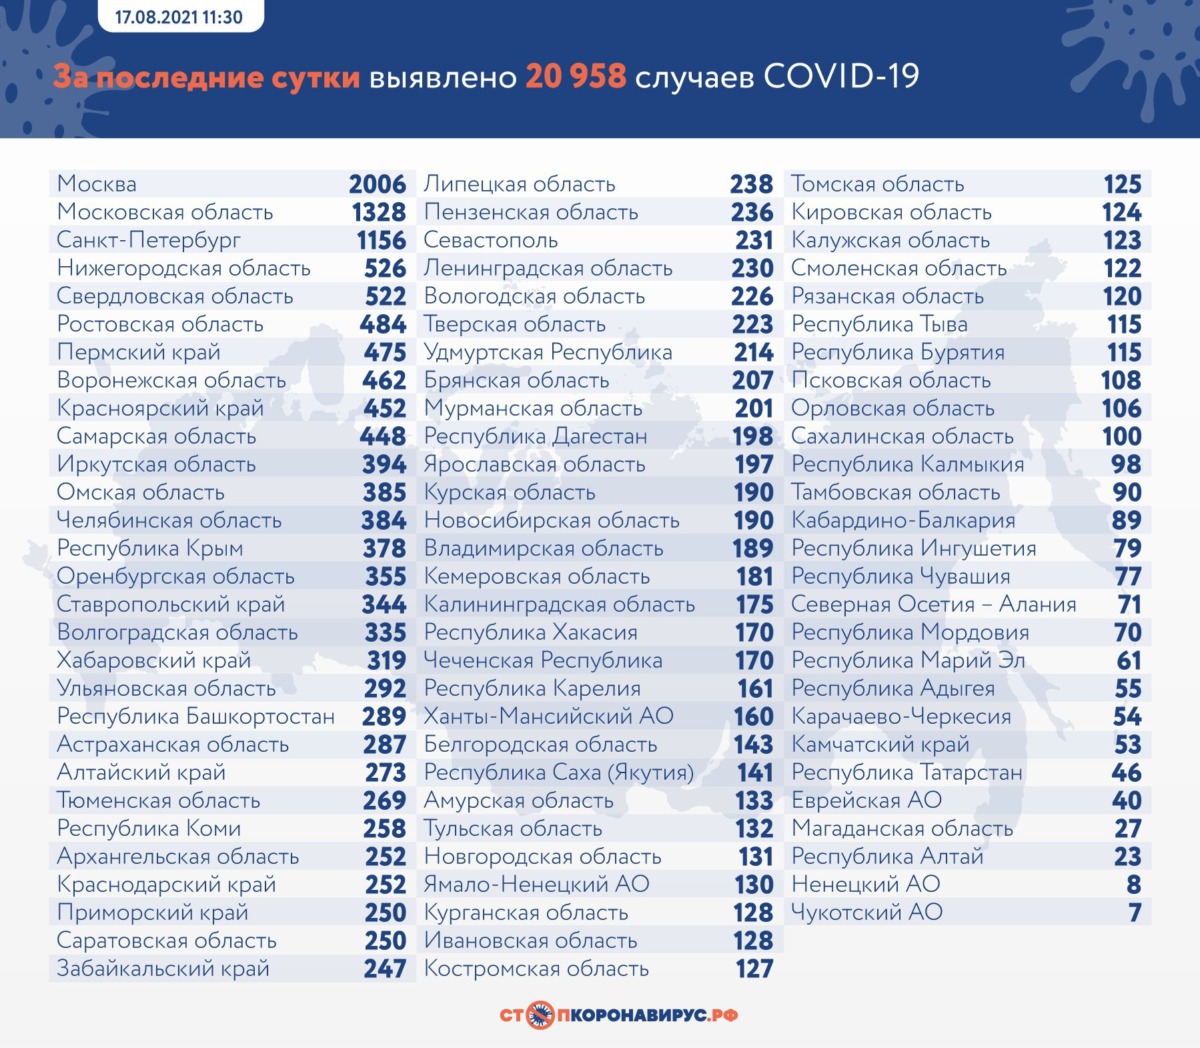 Оперативная статистика по коронавирусу в России на 17 августа